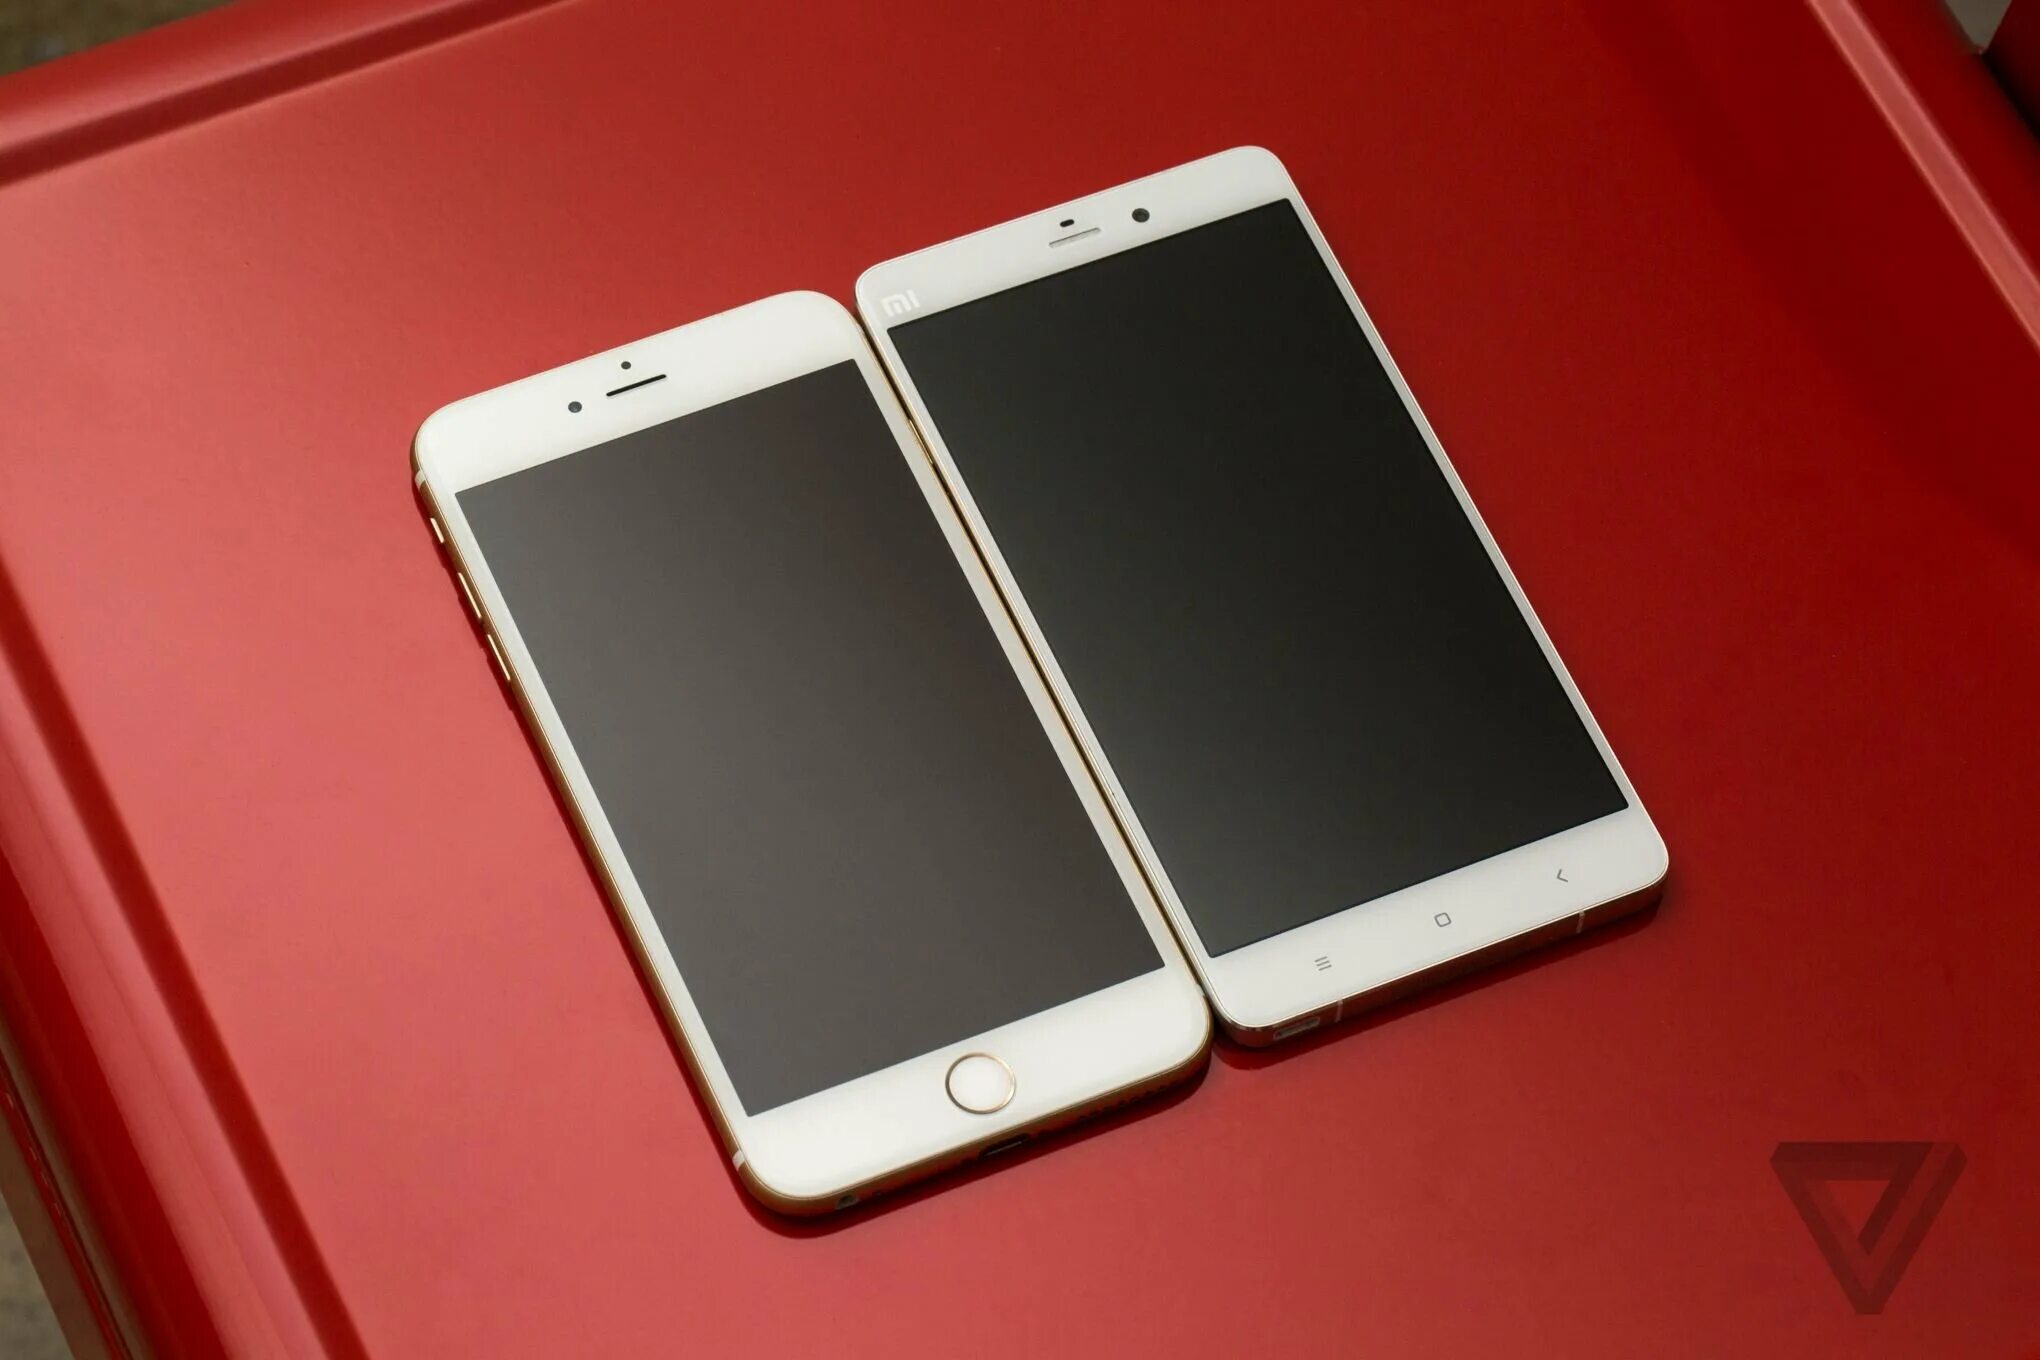 Remonts xiaomi. Редми похожий на айфон. Сяоми похожий на айфон. Сяоми редми похожий на айфон. Xiaomi Redmi который похож на айфон.